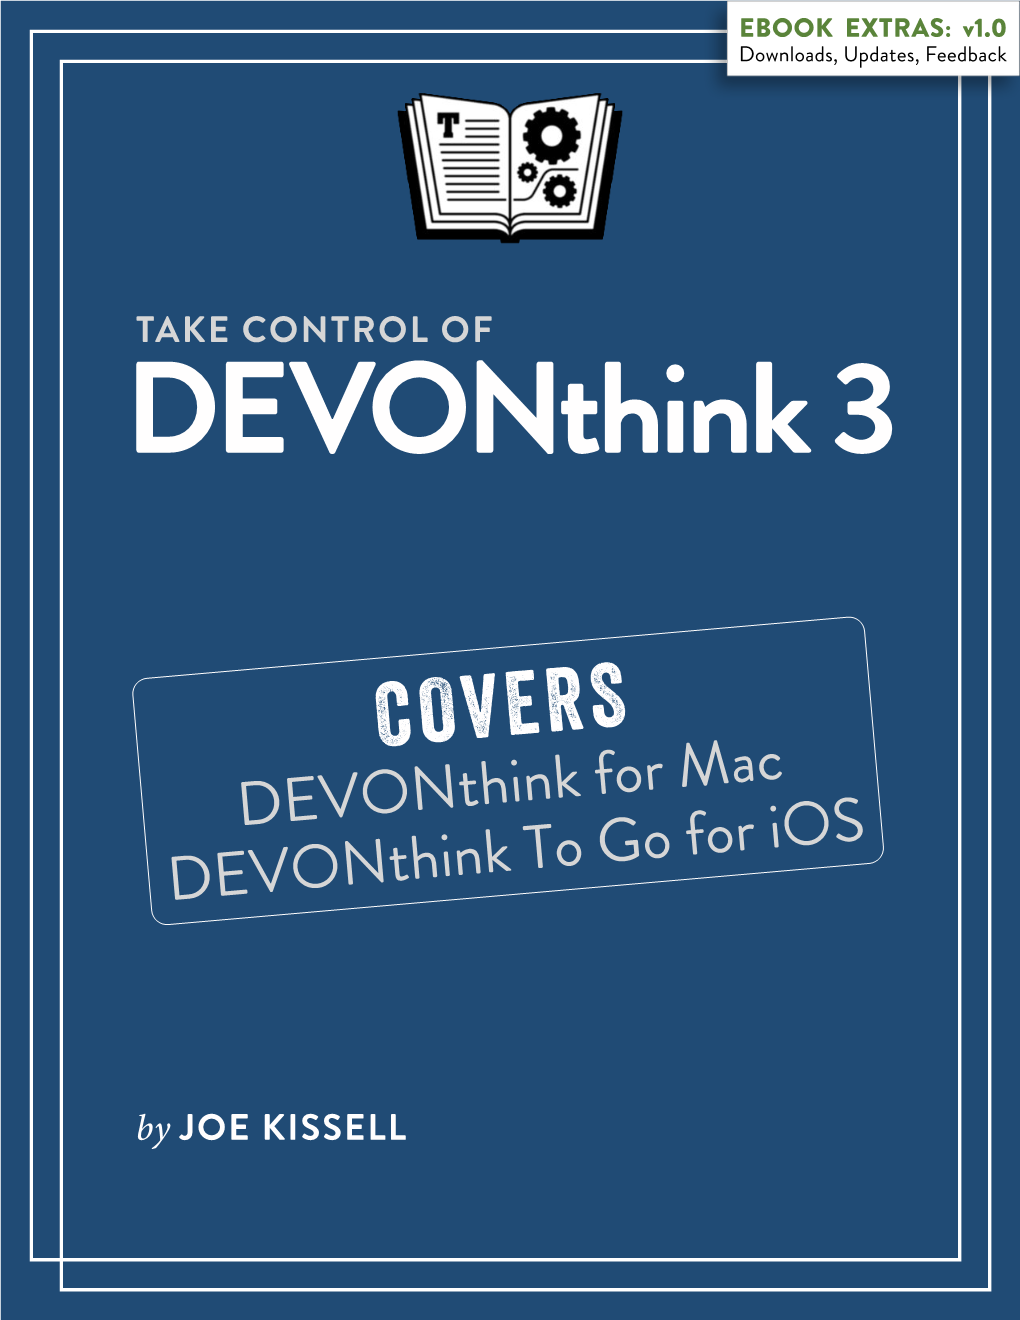 Take Control of Devonthink 3 (1.0)